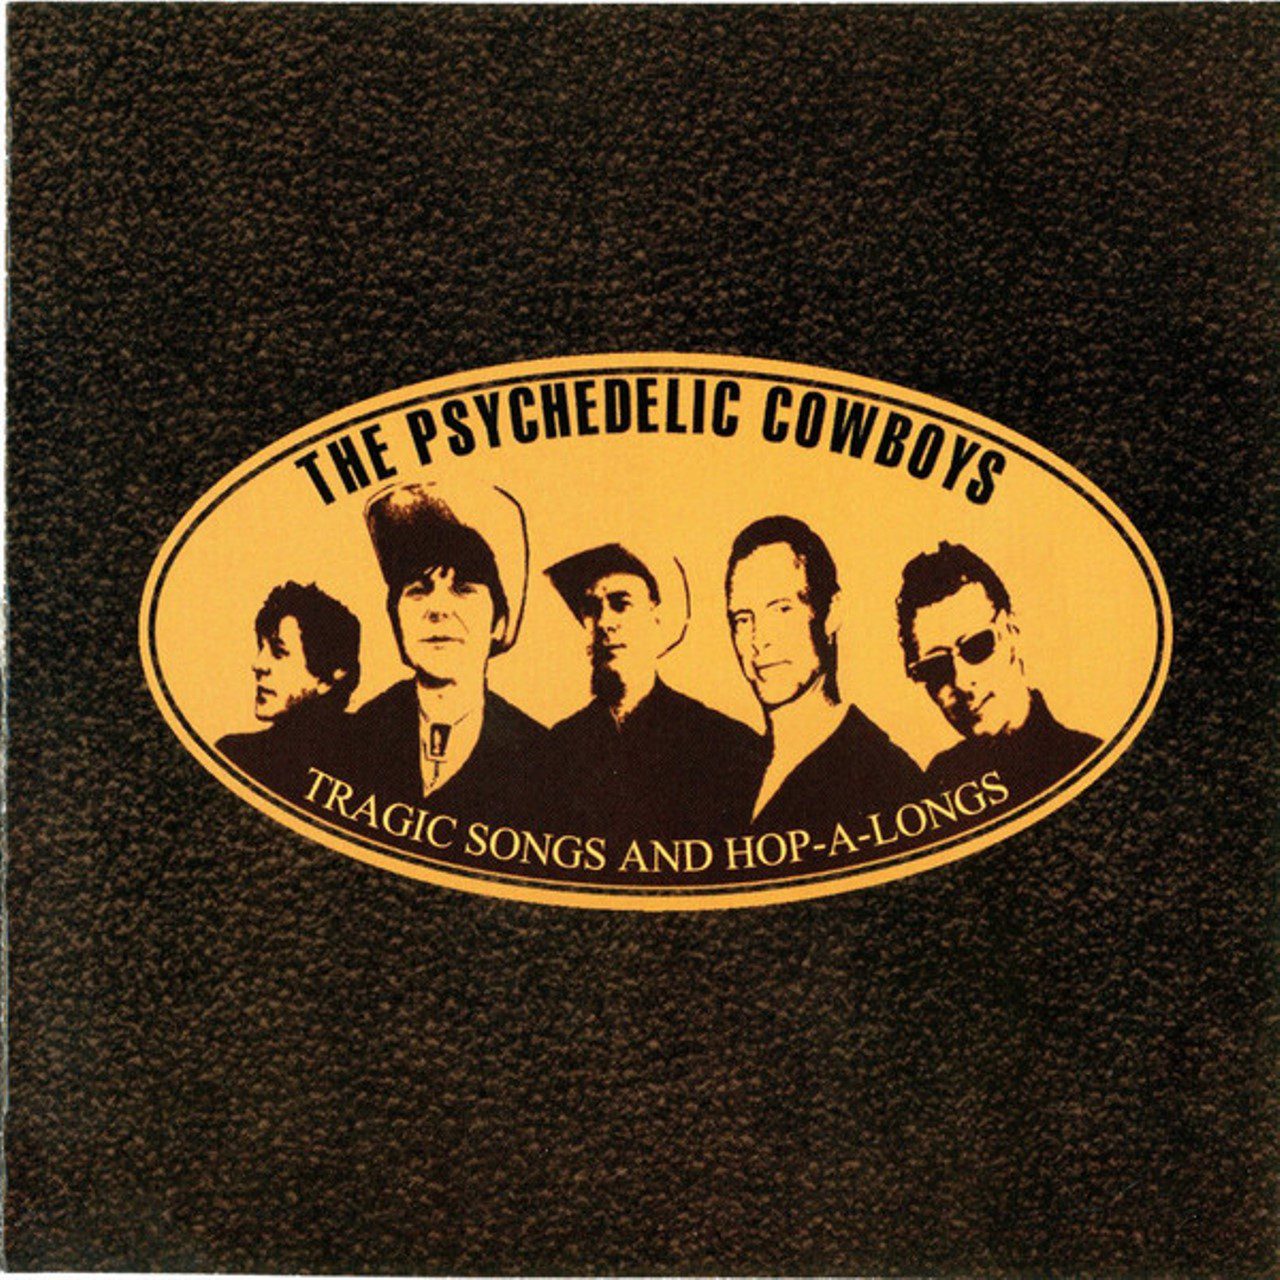 Psychedelic Cowboys - Tragic Songs & Hop-a-longs cover album